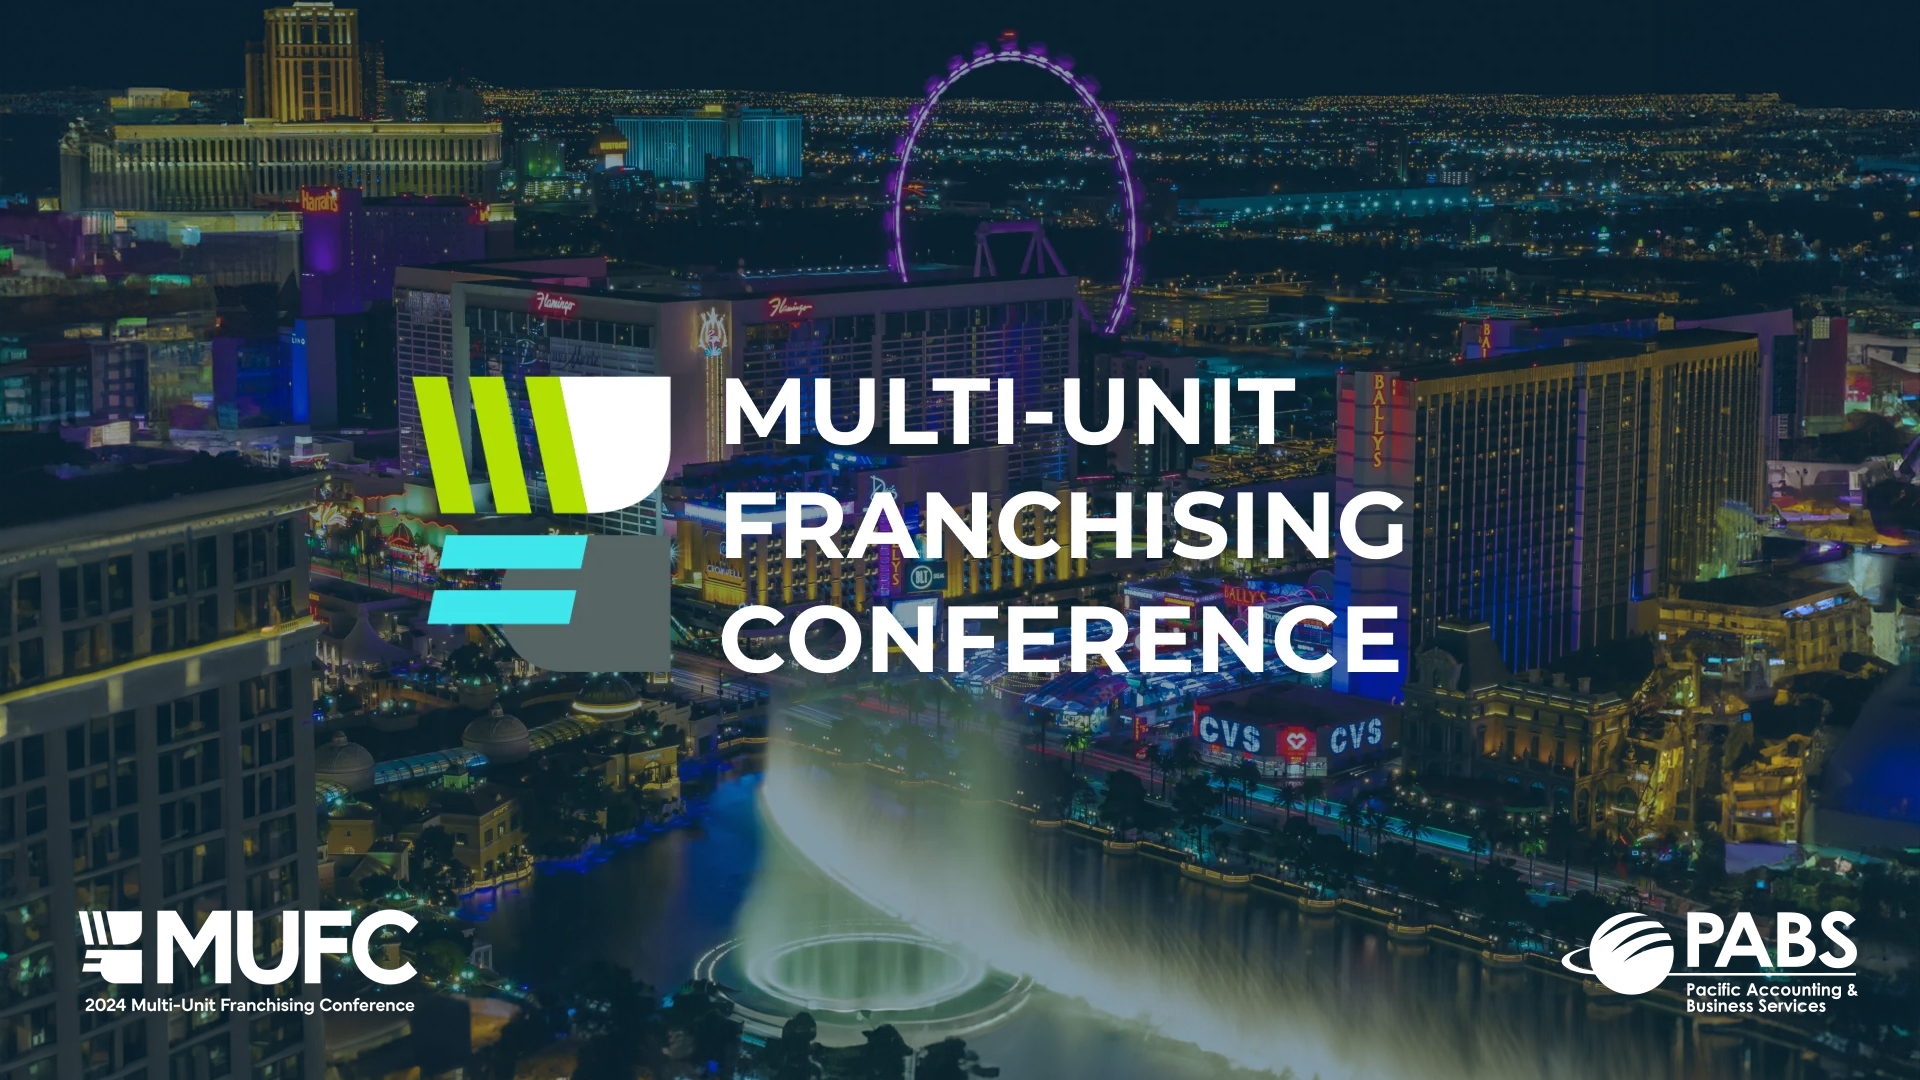 2024 Multi-unit Franchising Conference in Las Vegas